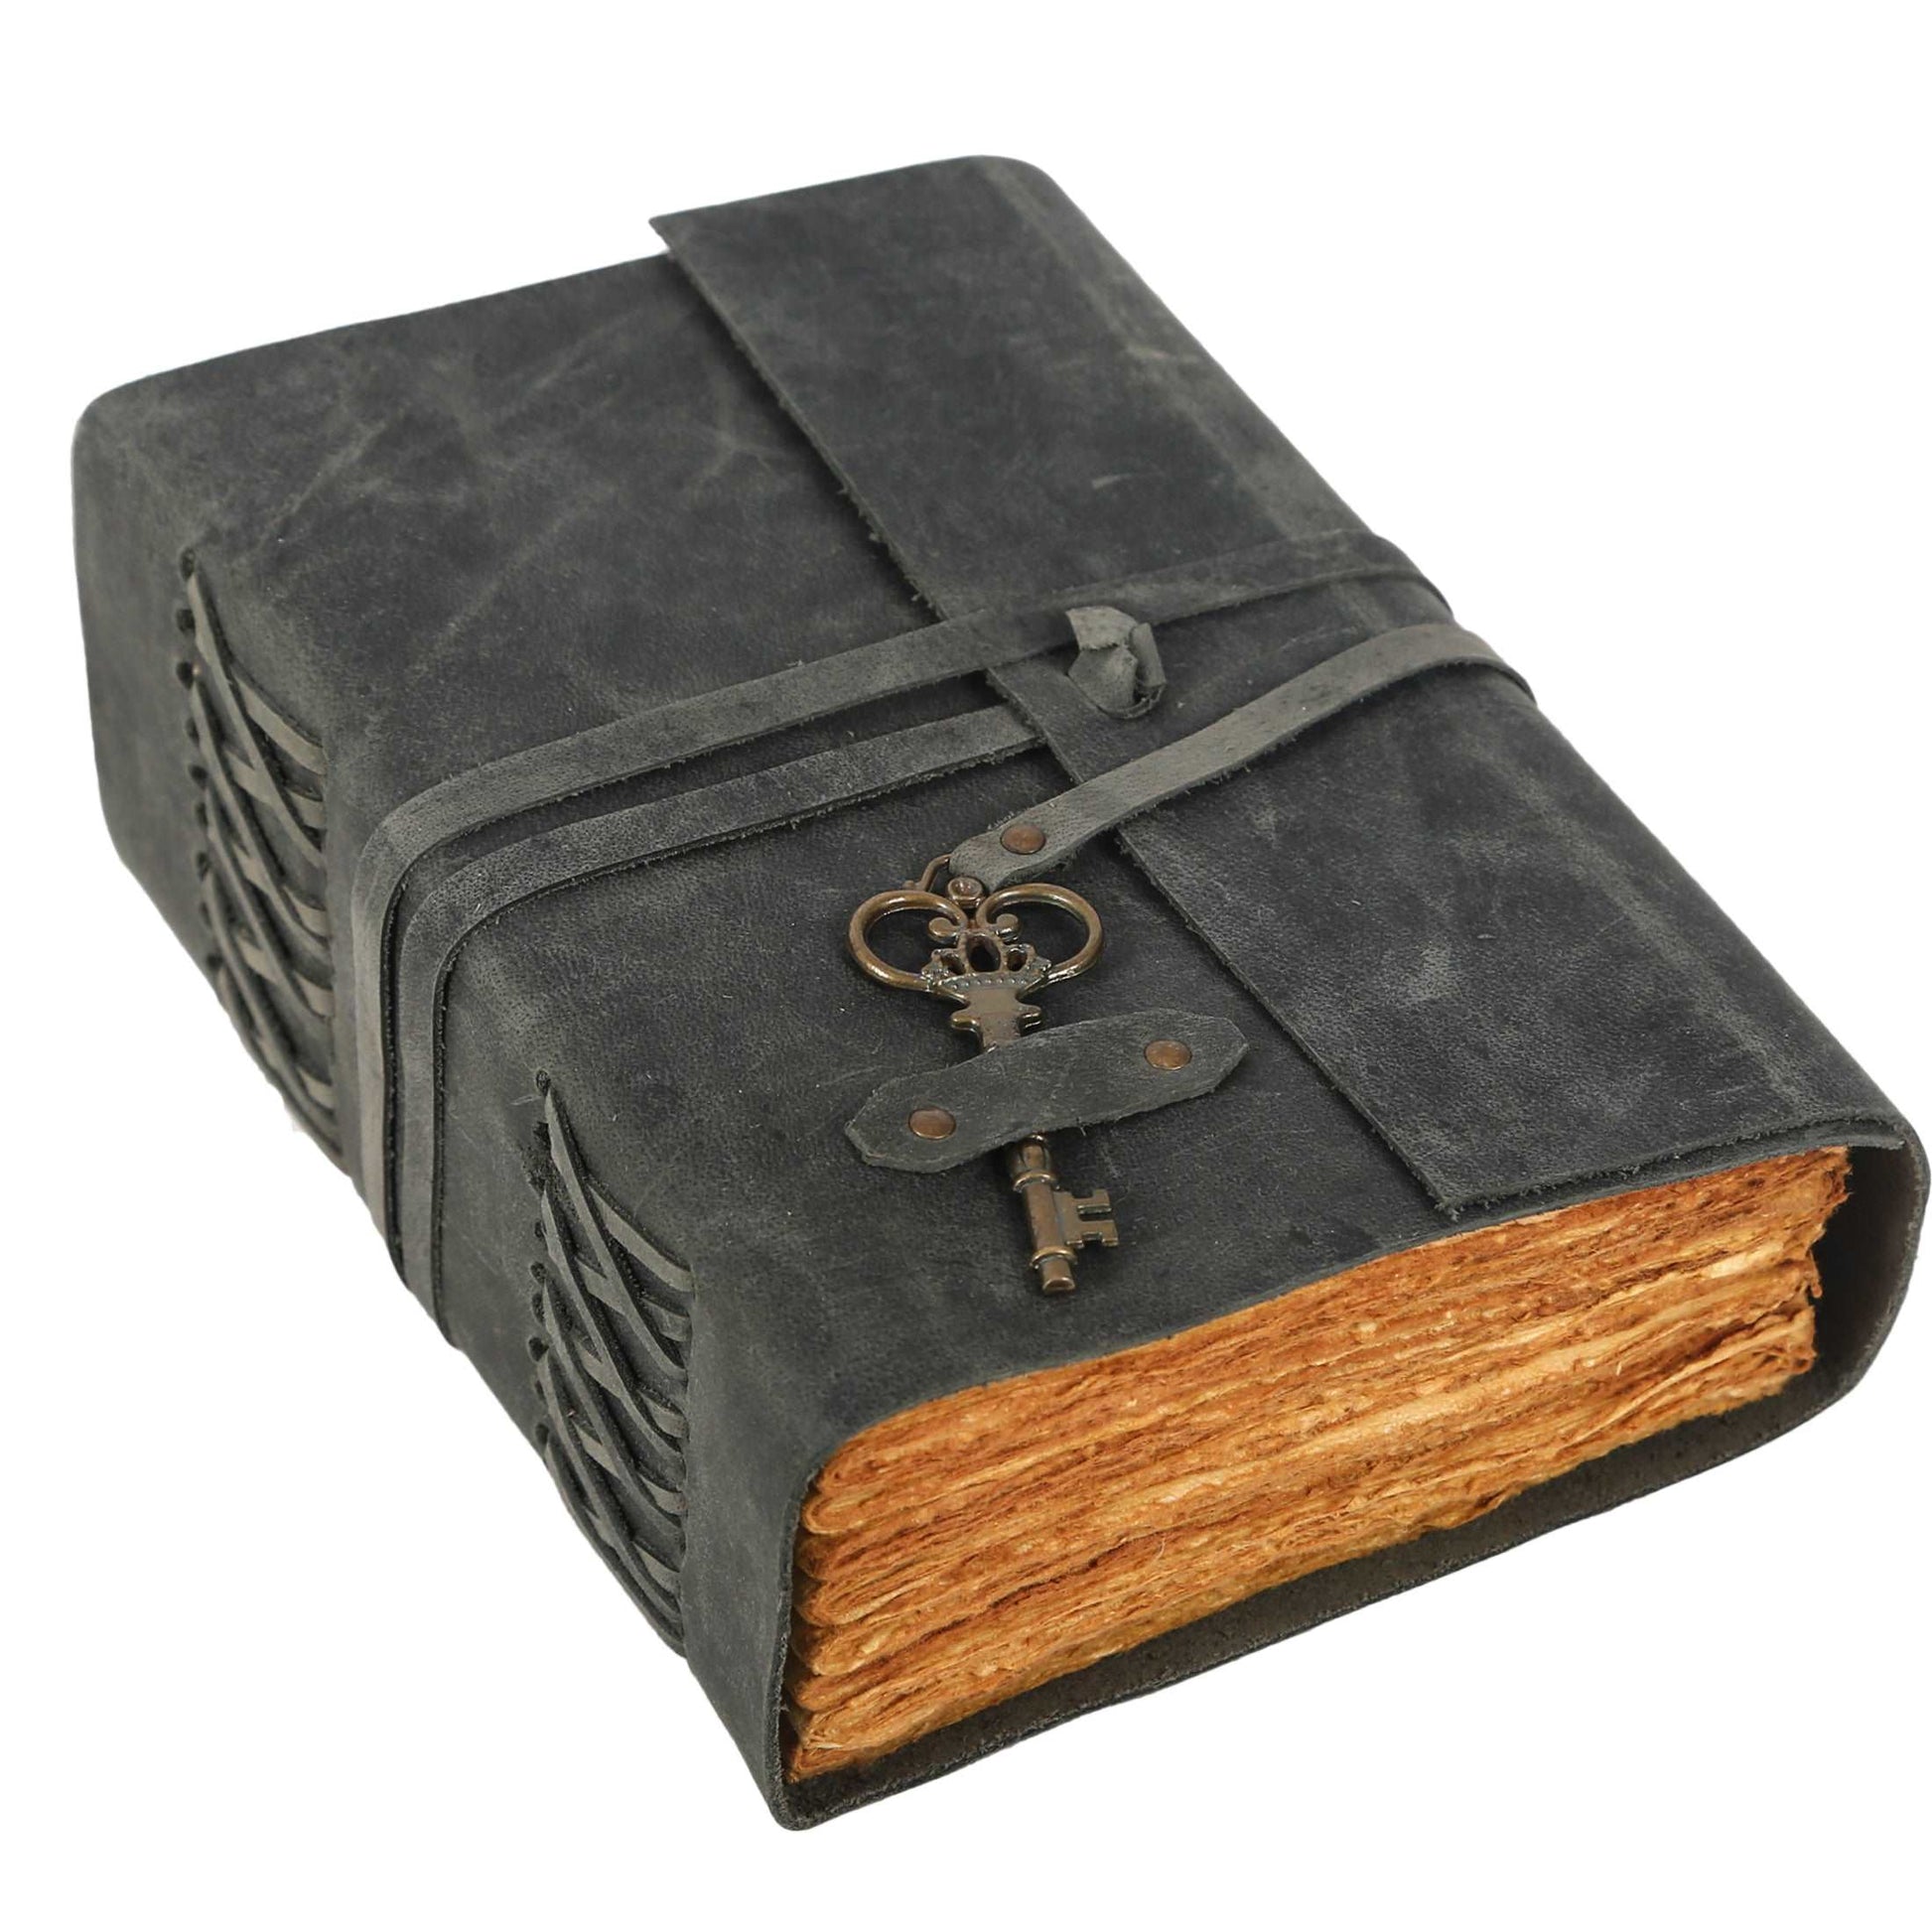 Vintage Black Leather Journal Deckle Edge Rustic Paper, Unlined Pages Book of Shadows, leatherbound Grimoire, Junk Notebook, Fantasy Medieval Gifts, Sketchbook, Scrapbook